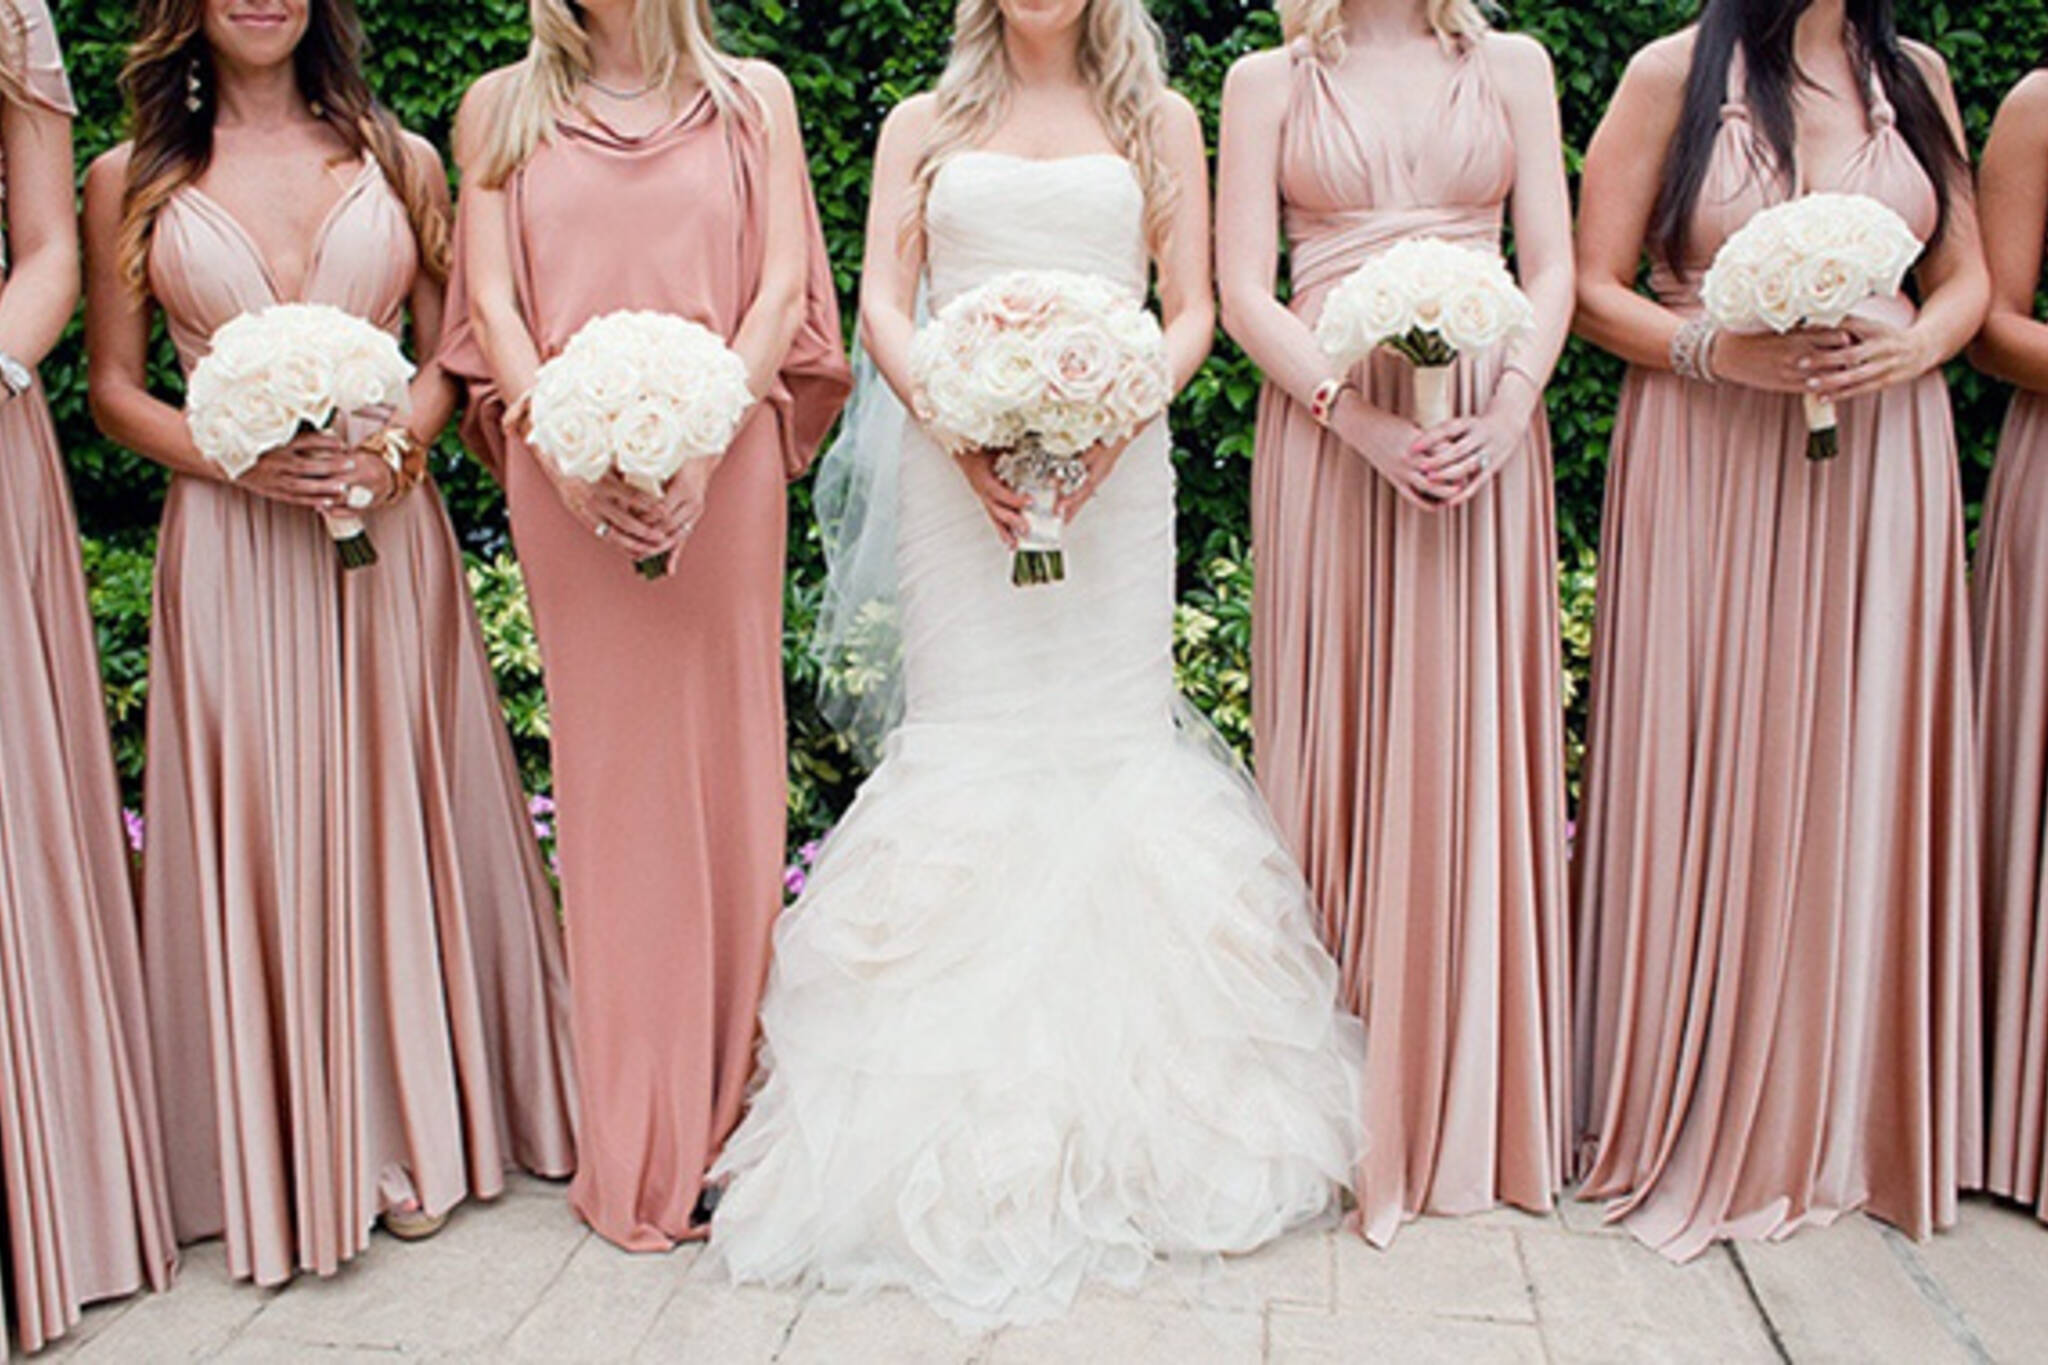 Wedding bridesmaid dresses toronto – Dress online uk